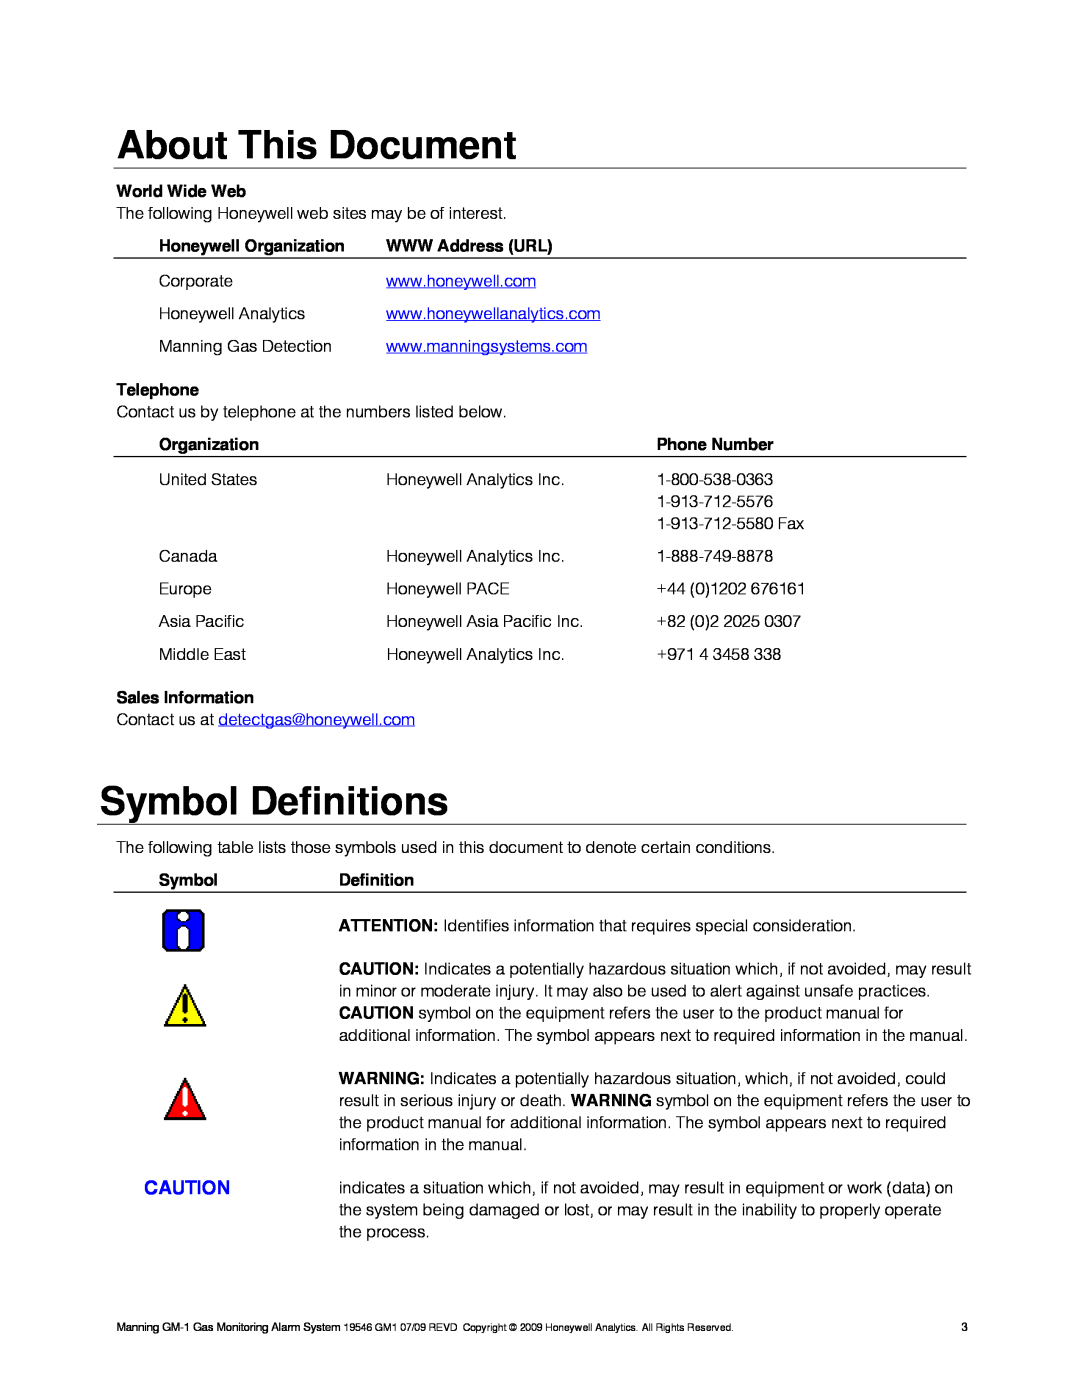 Honeywell 19546GM1, GM-1 About This Document, Symbol Definitions, World Wide Web, Honeywell Organization, WWW Address URL 